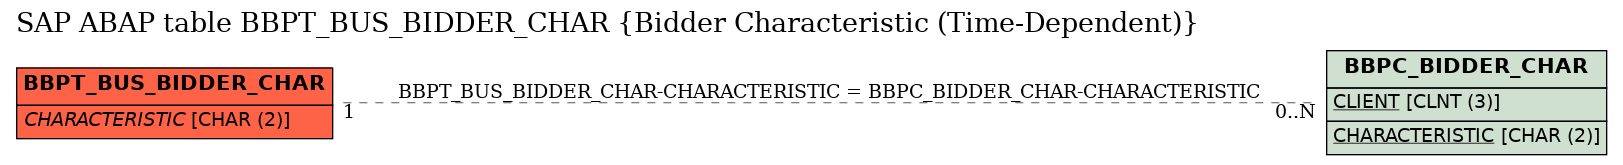 E-R Diagram for table BBPT_BUS_BIDDER_CHAR (Bidder Characteristic (Time-Dependent))